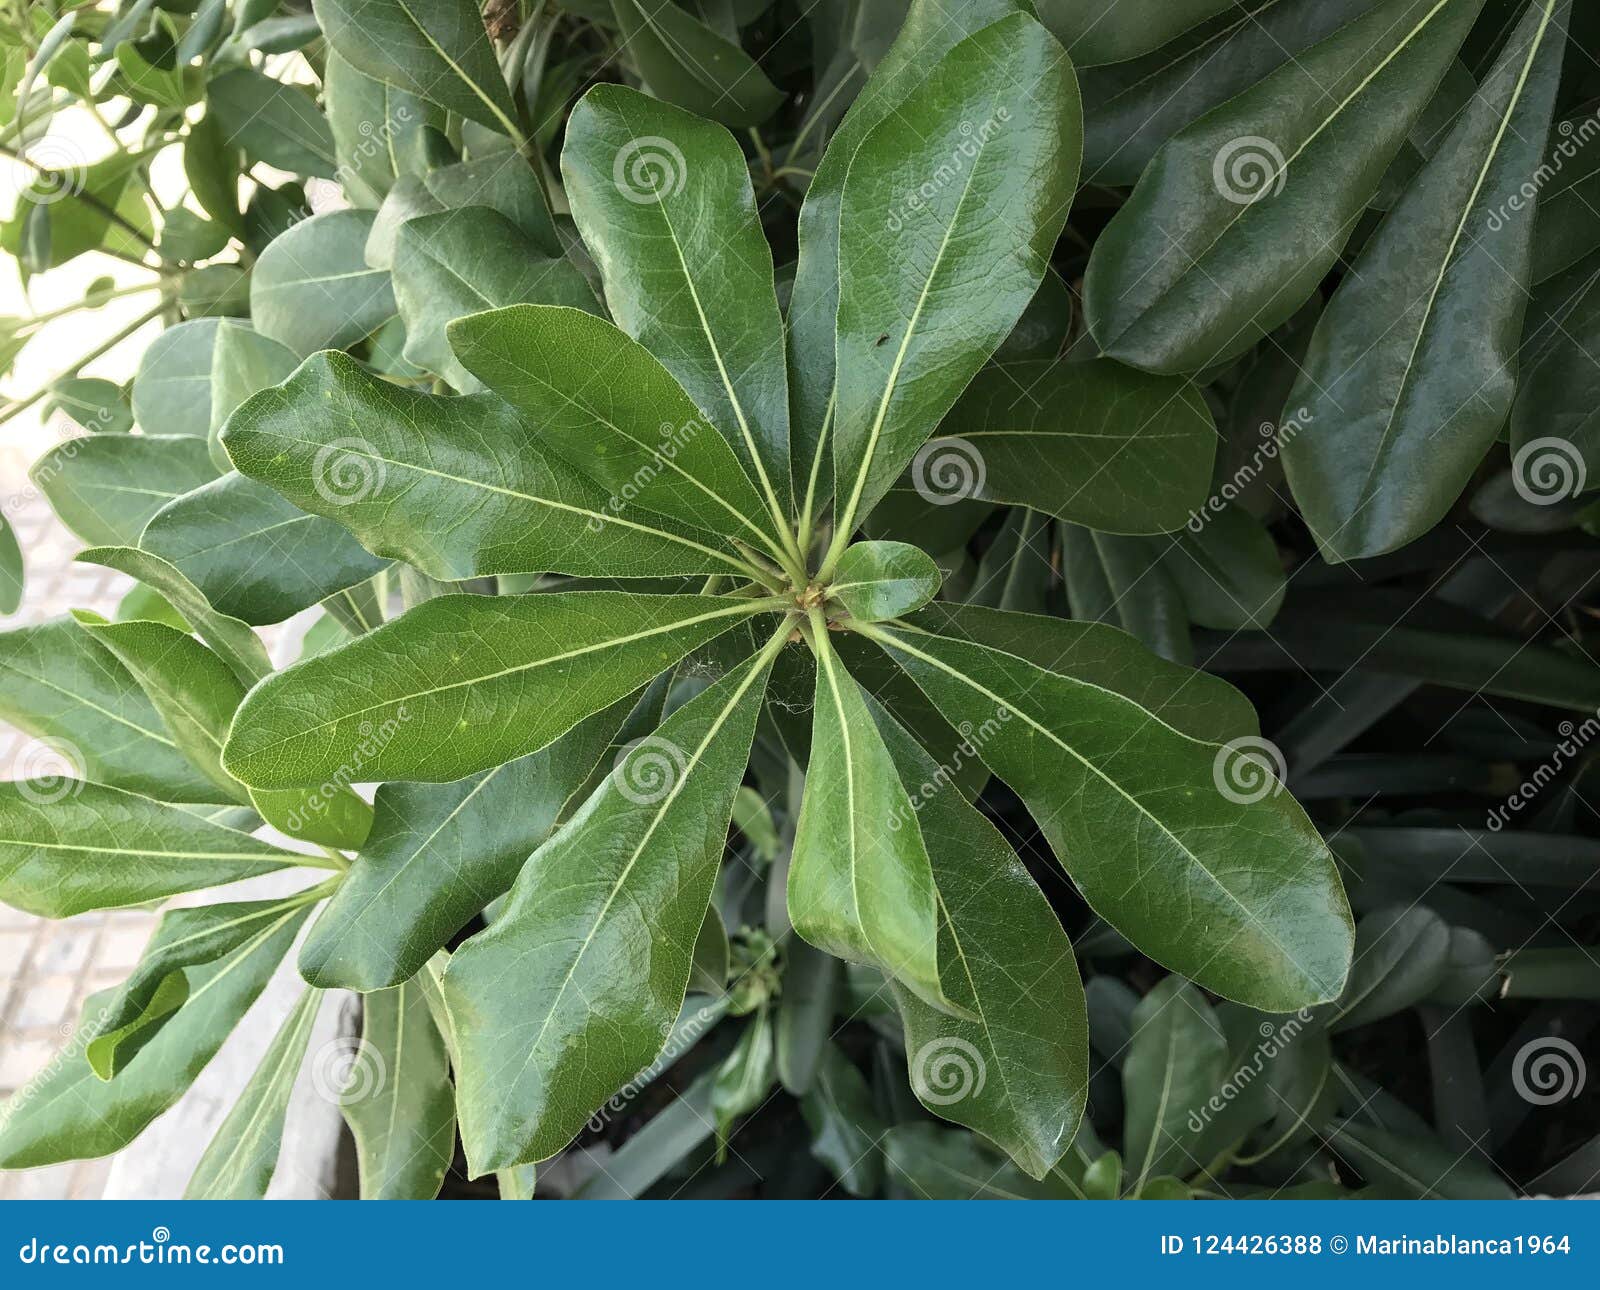 the big and green leaf.